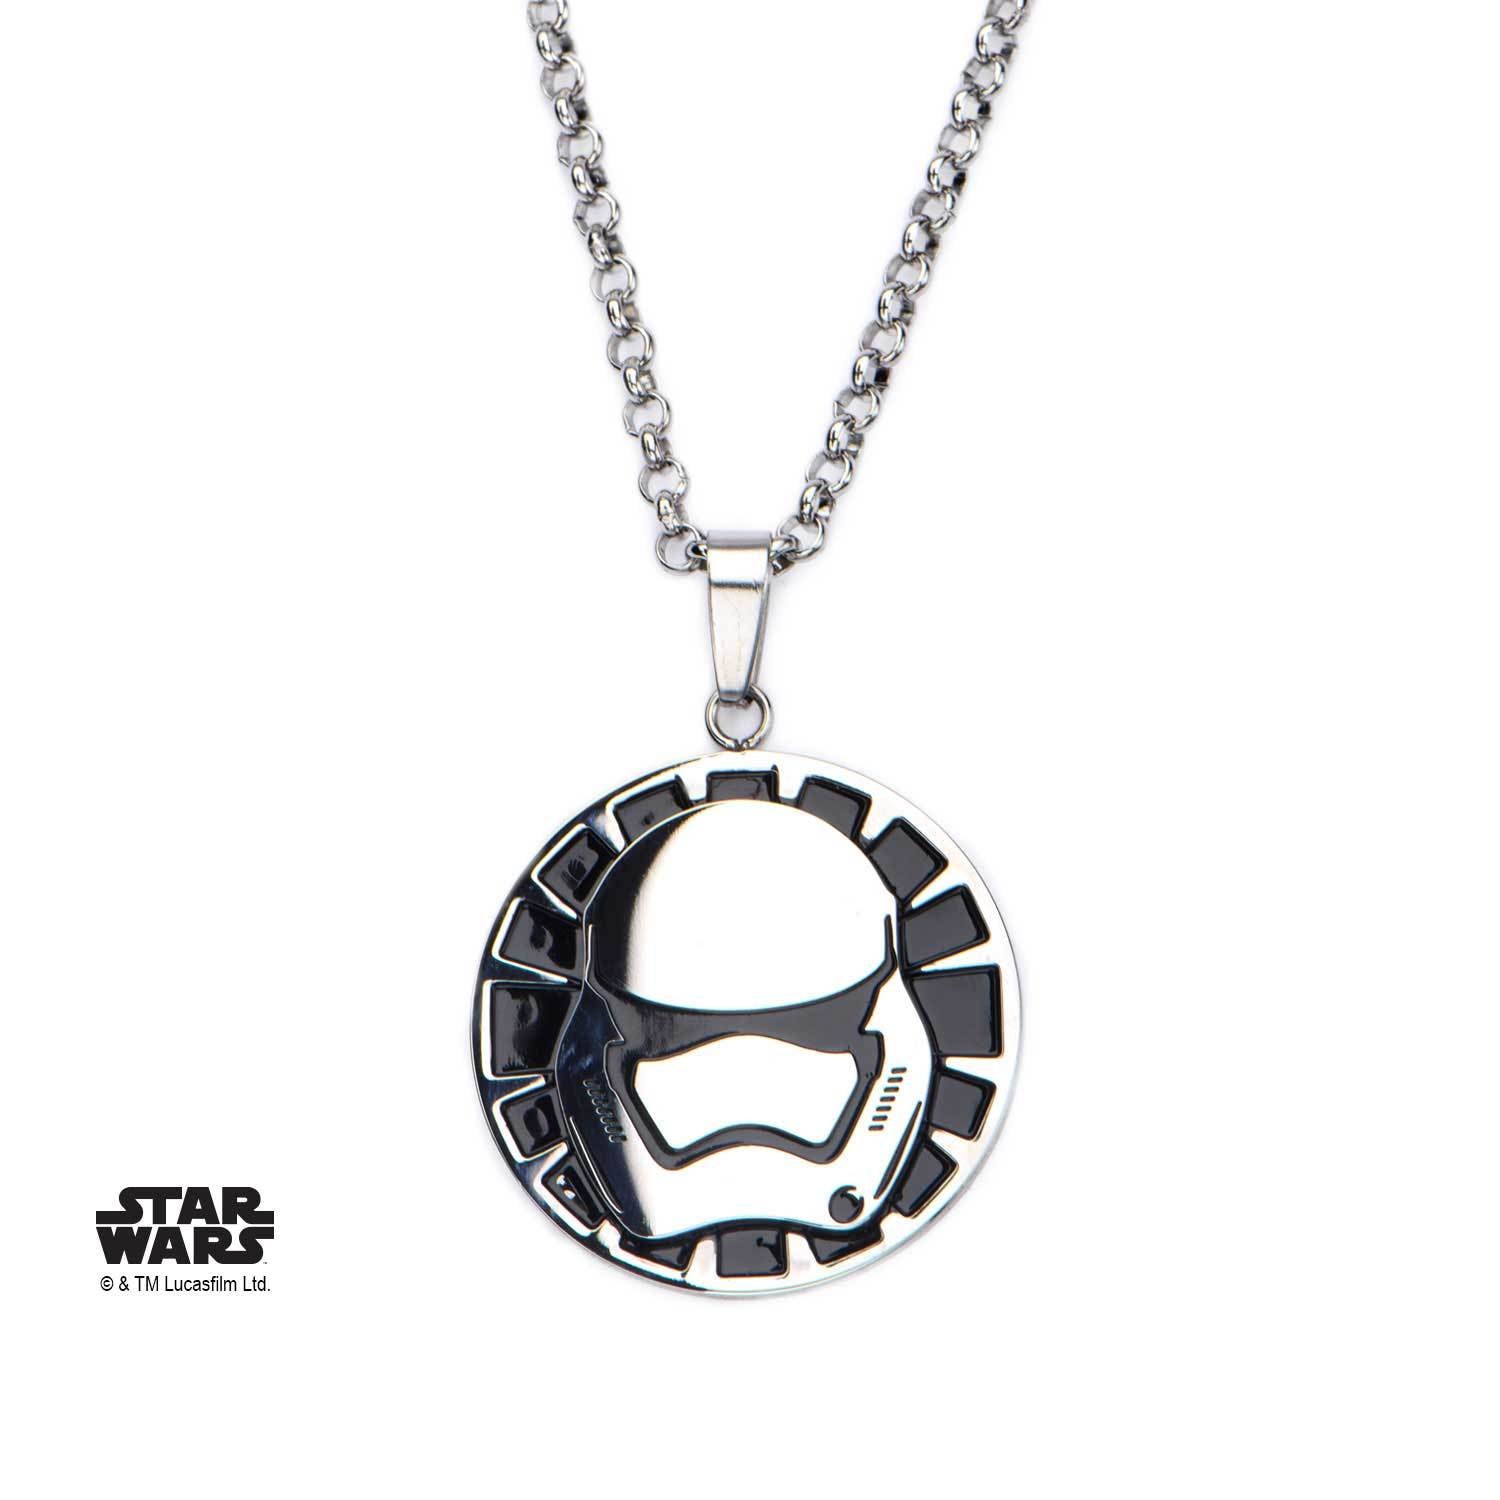 Star Wars Episode 7 Stormtrooper Pendant Necklace